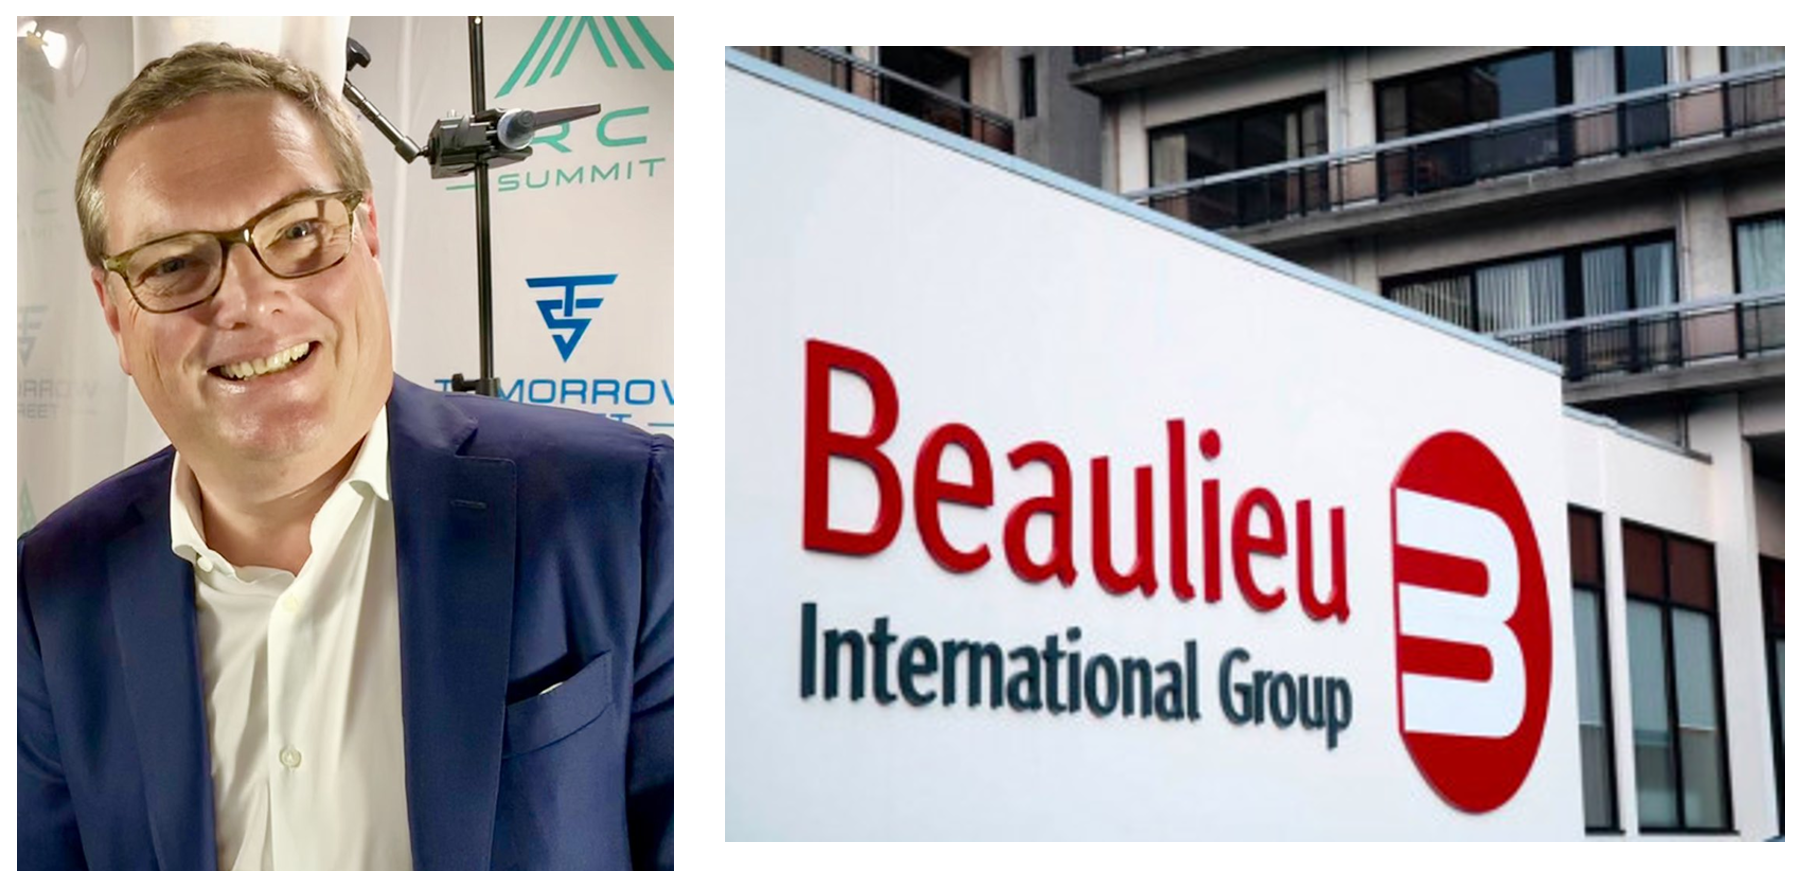 Bart Deconinck is nieuwe voorzitter Beaulieu International Group